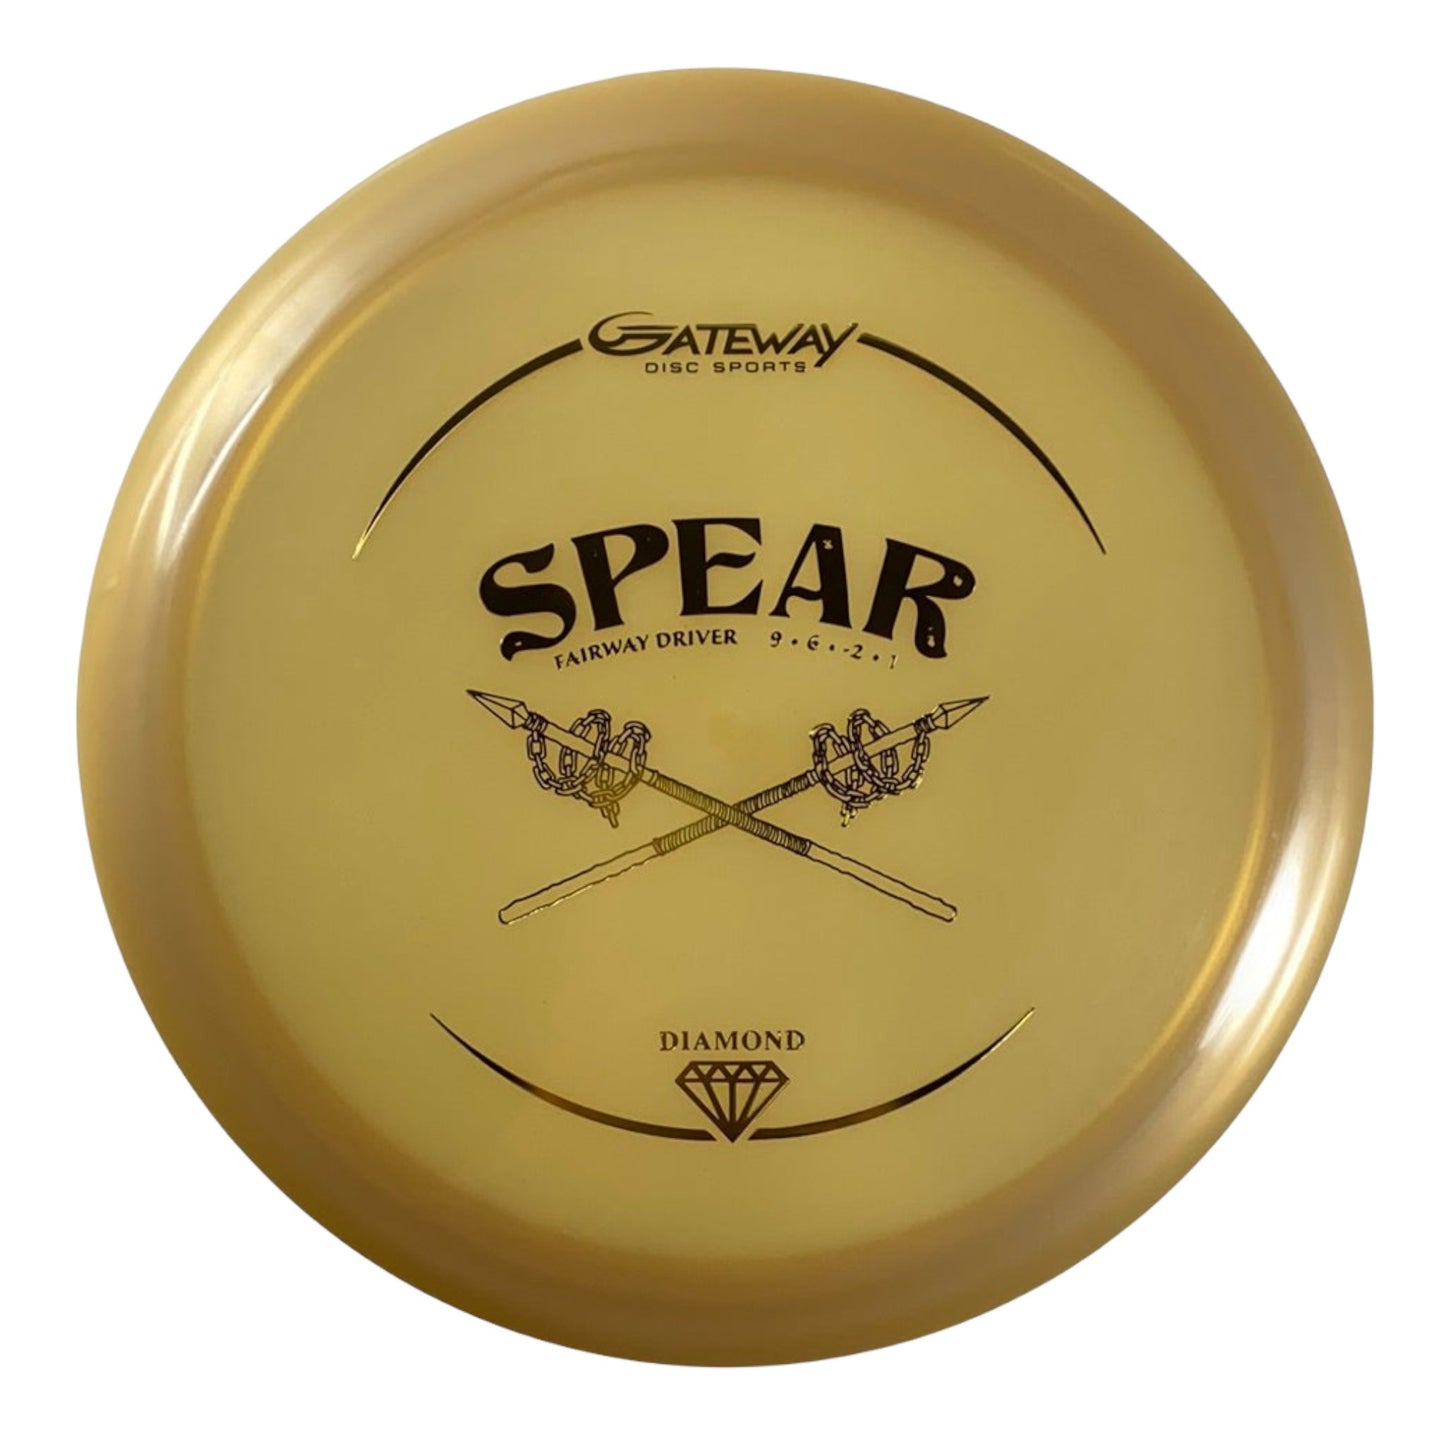 Gateway Disc Sports Spear | Diamond | Tan/Gold 175g Disc Golf